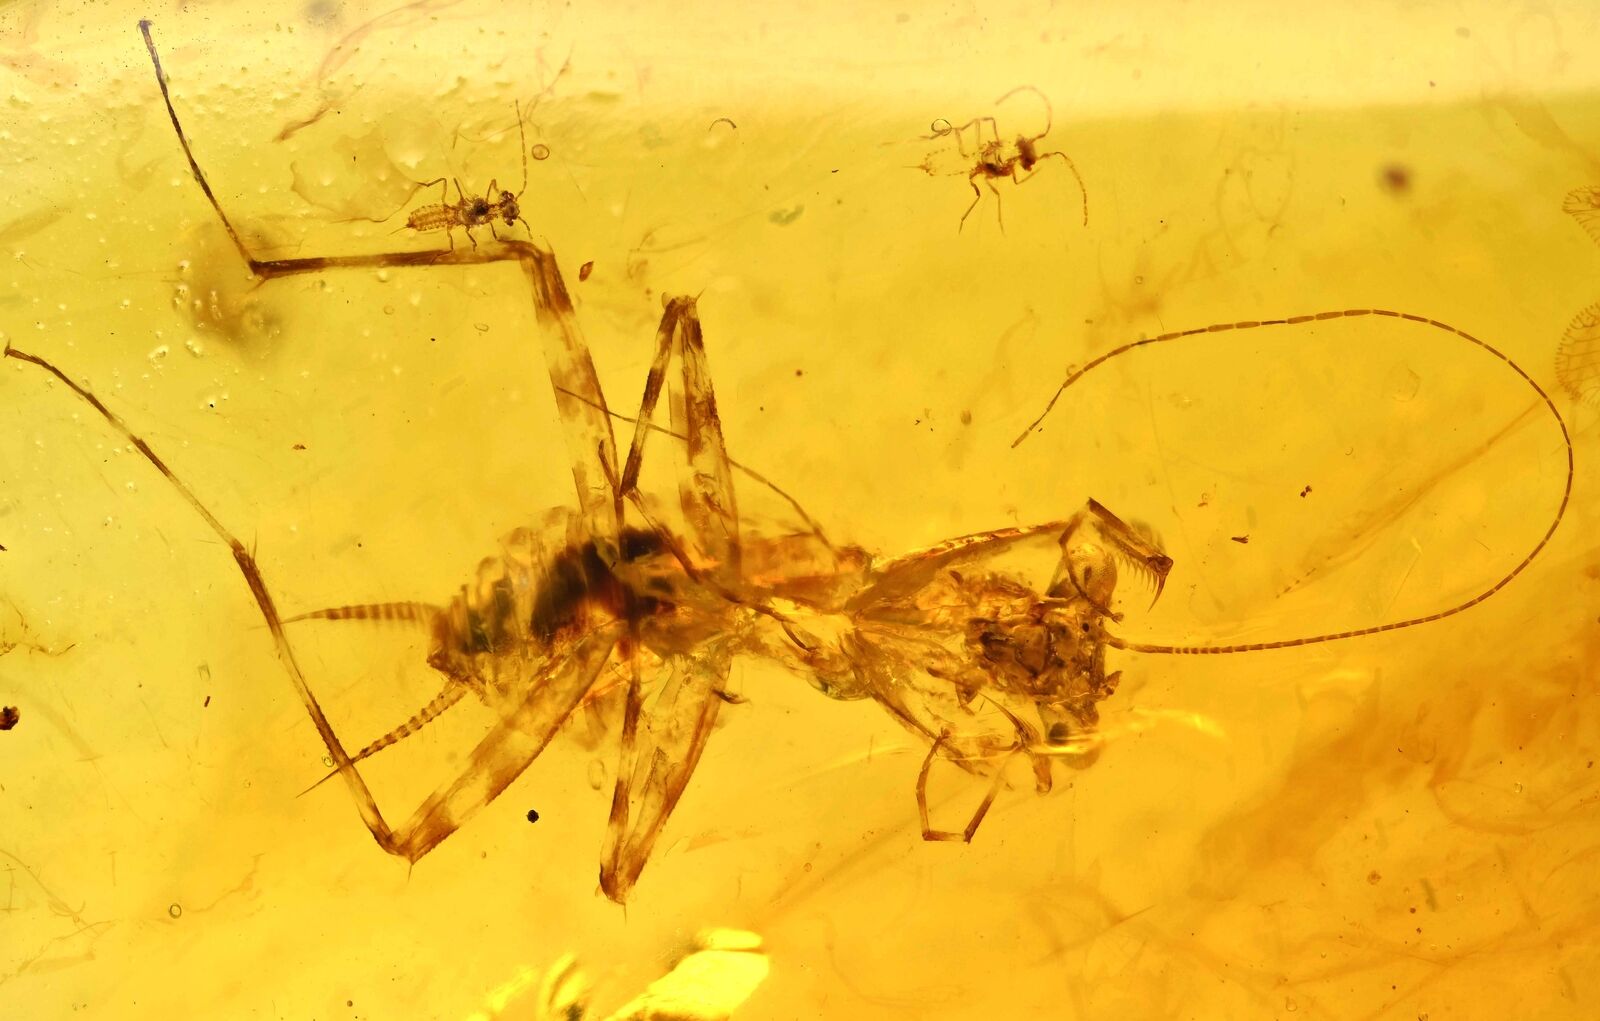 Rare Juvenile Mantodea (Praying Mantis), Fossil inclusion in Burmese Amber